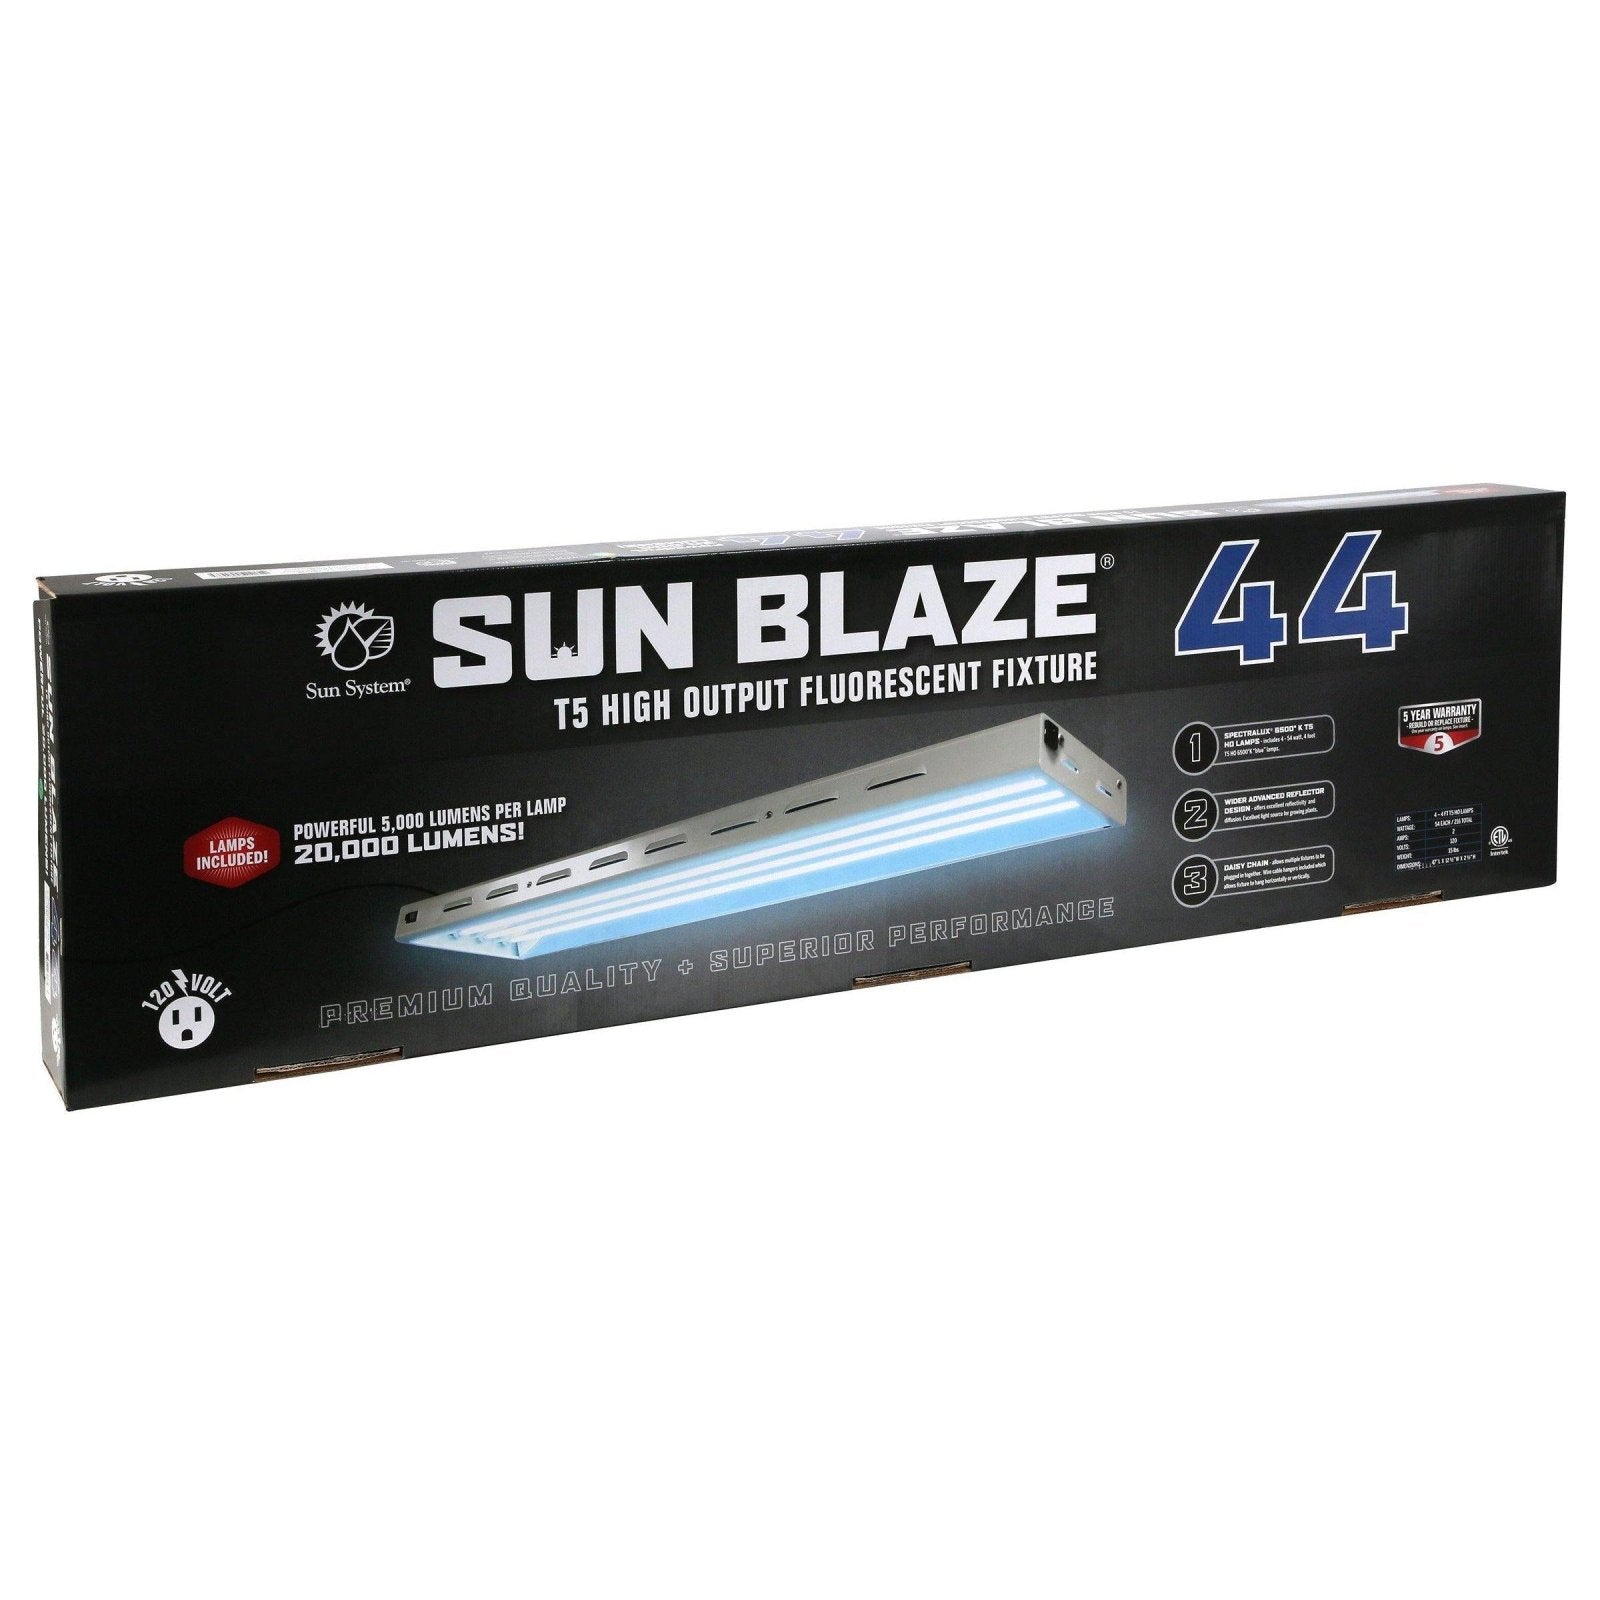 Lighting - Sun Blaze - T5 HO 44 - 4’, 4 Lamp, 120 Volt - 870883004965- Gardin Warehouse